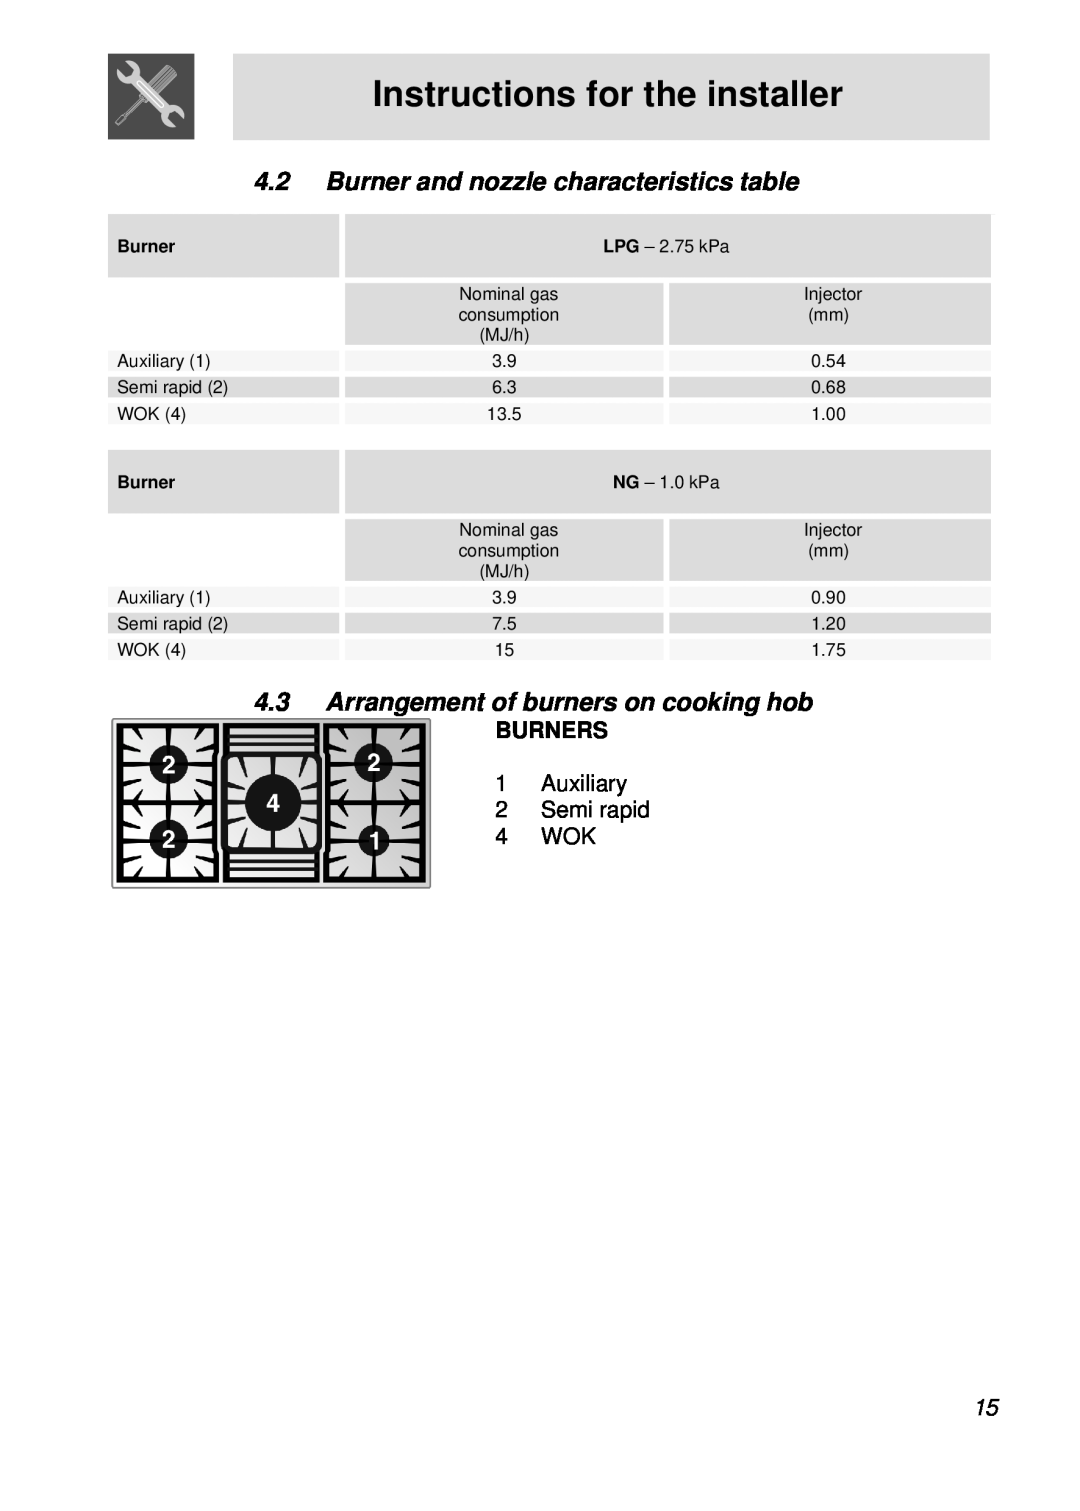 Smeg PGFA95F-1 manual 4.2Burner and nozzle characteristics table, Arrangement of burners on cooking hob, Burners 